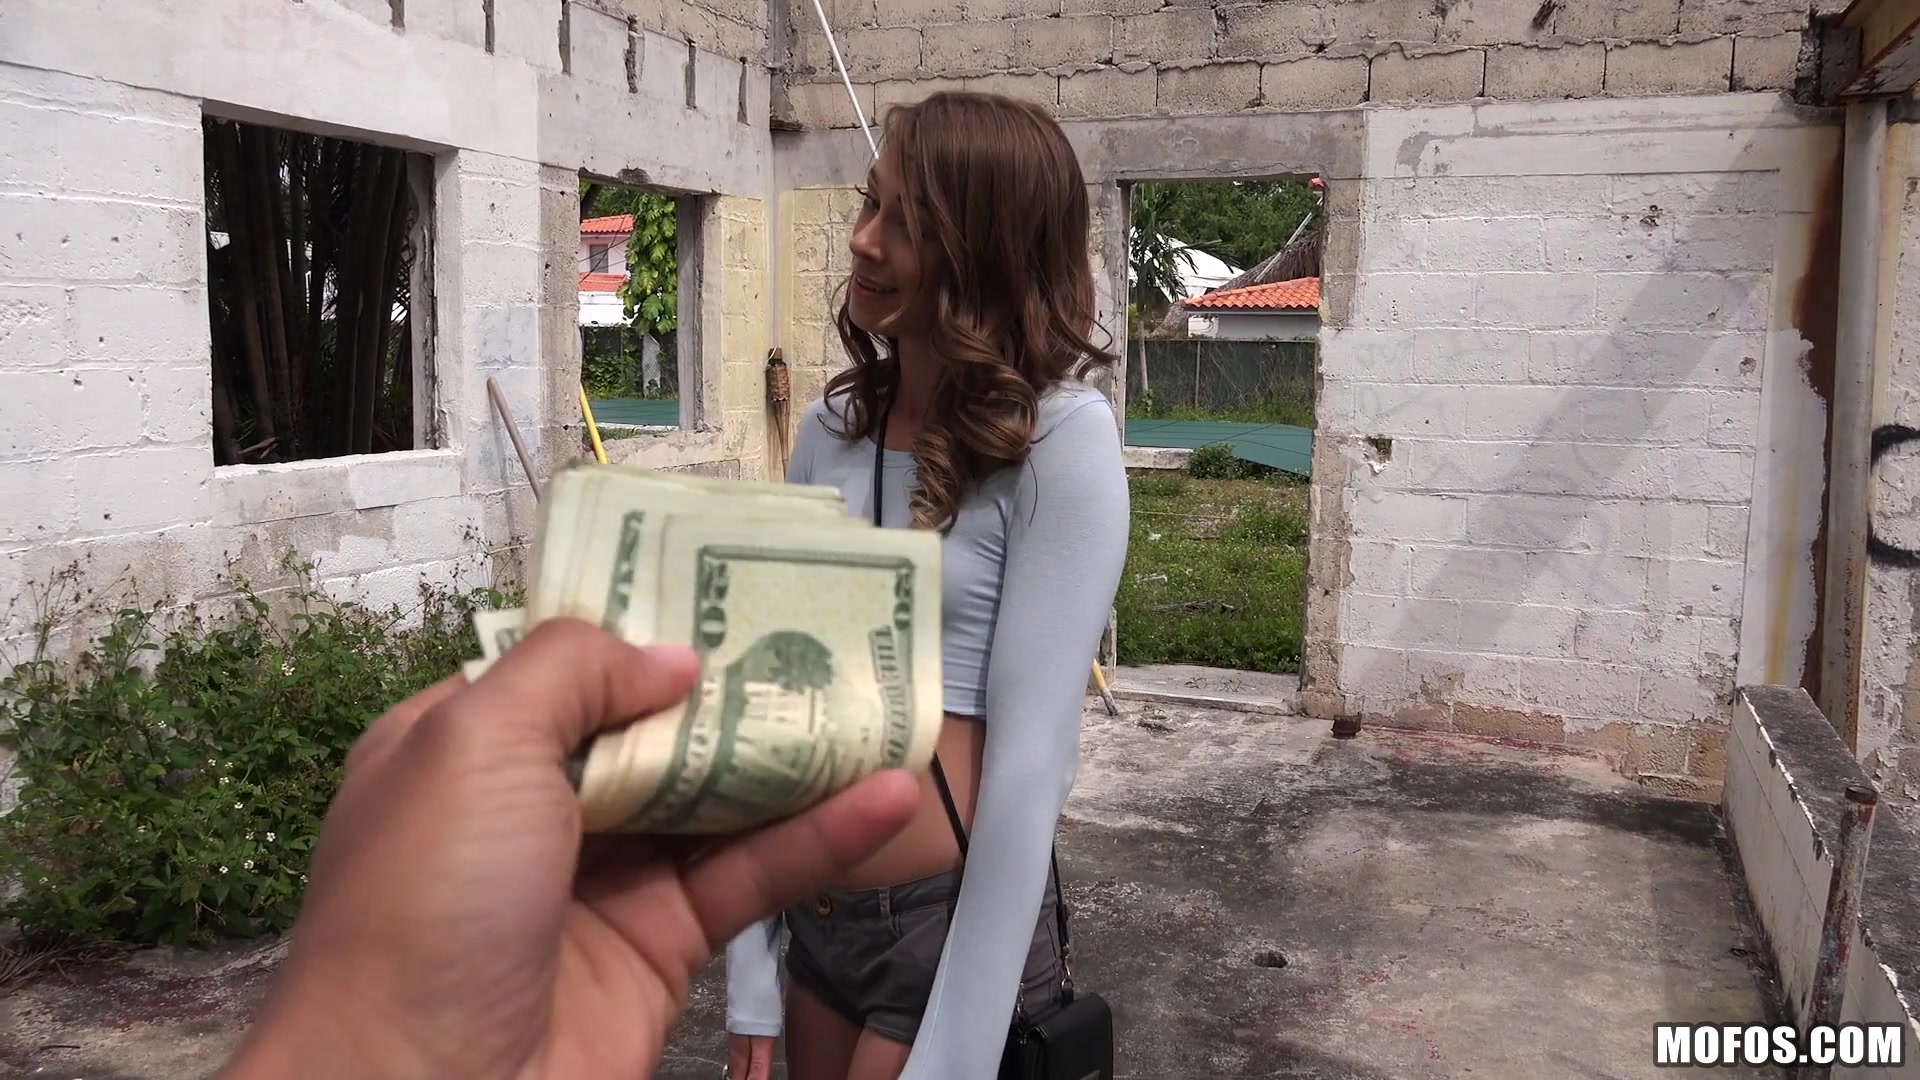 Трахнул девушку за деньги на улице: 1000 видео нашлось